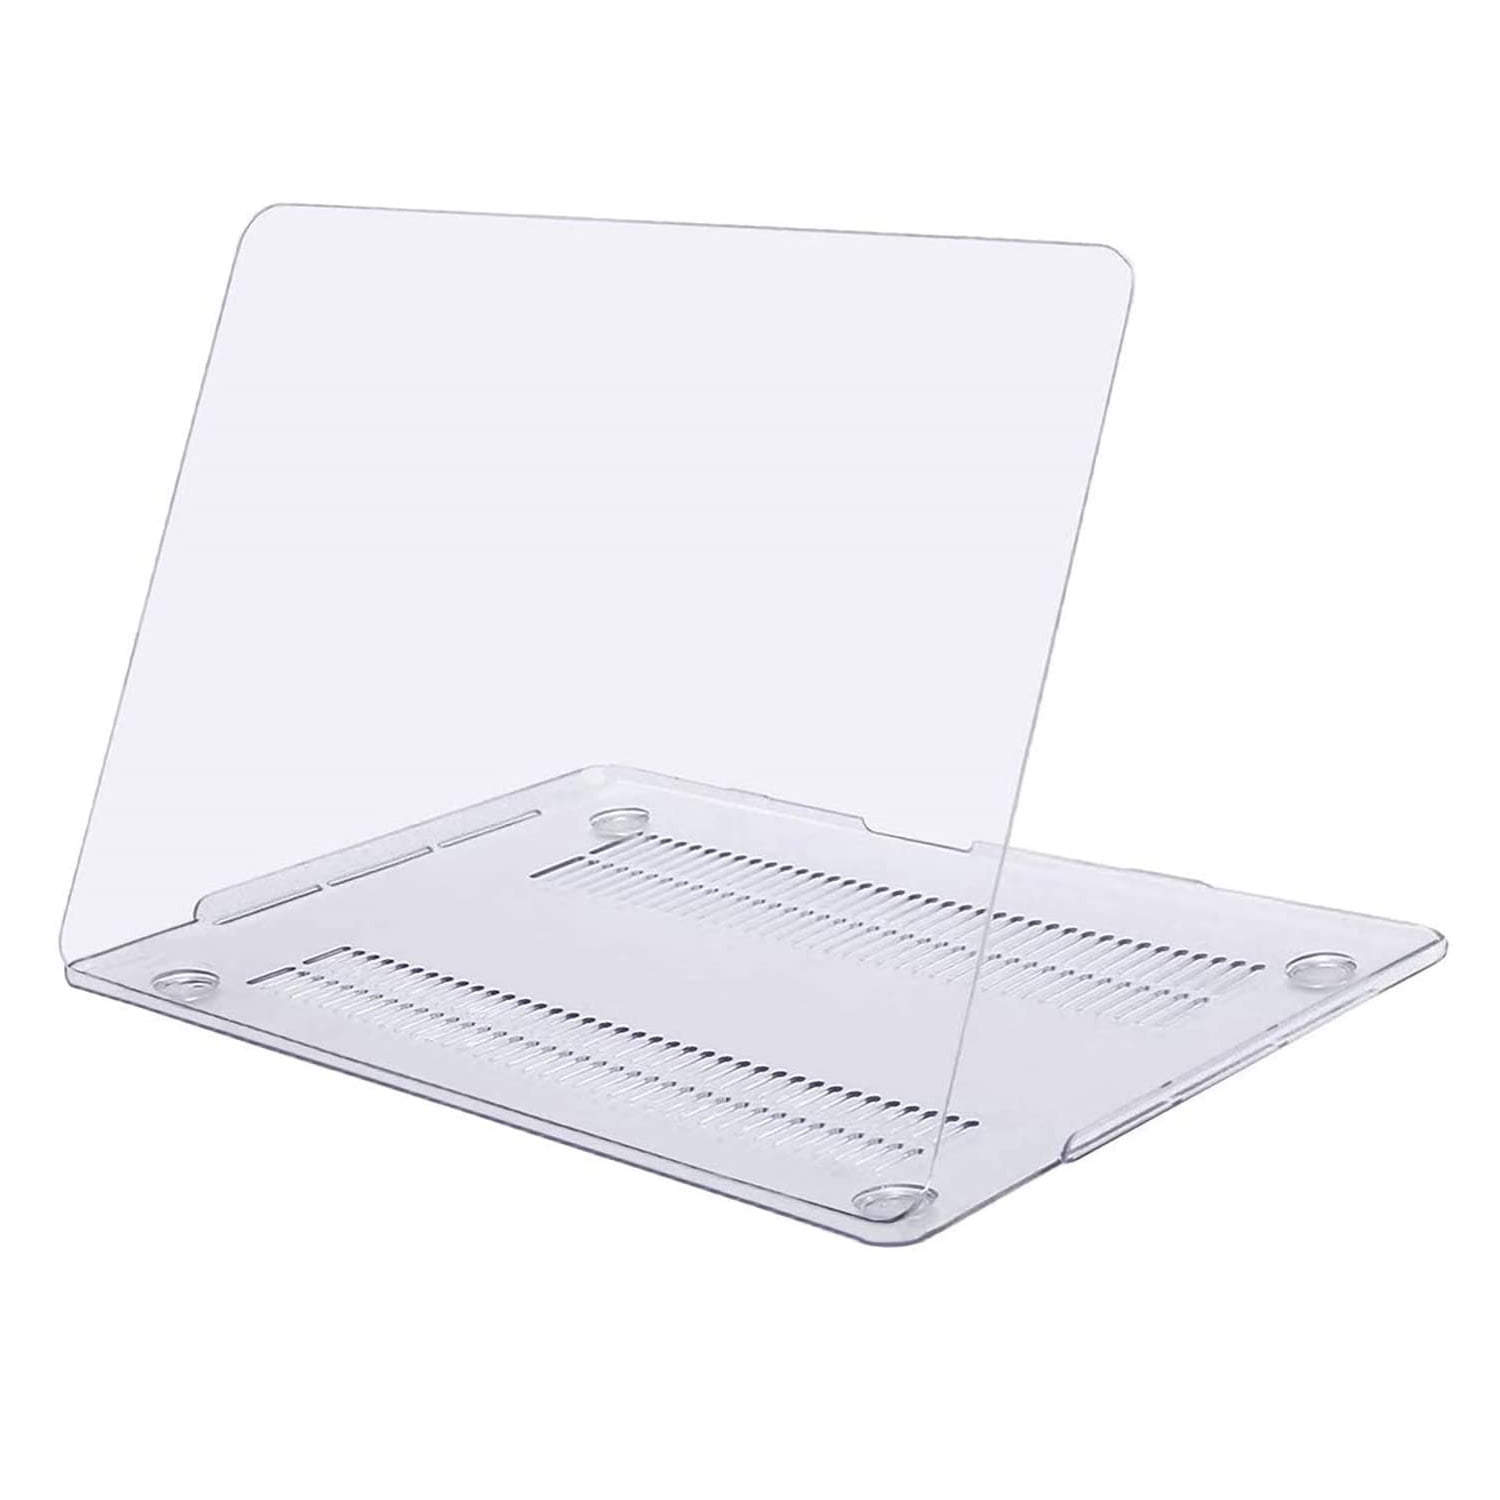 M1 A2338 A2289 A2251 A2159 A1989 A1706 A1708, 2016-2020 Release Compatible with MacBook Pro 13 inch Hard Plastic Shell Cover Case Zodiac Libra 